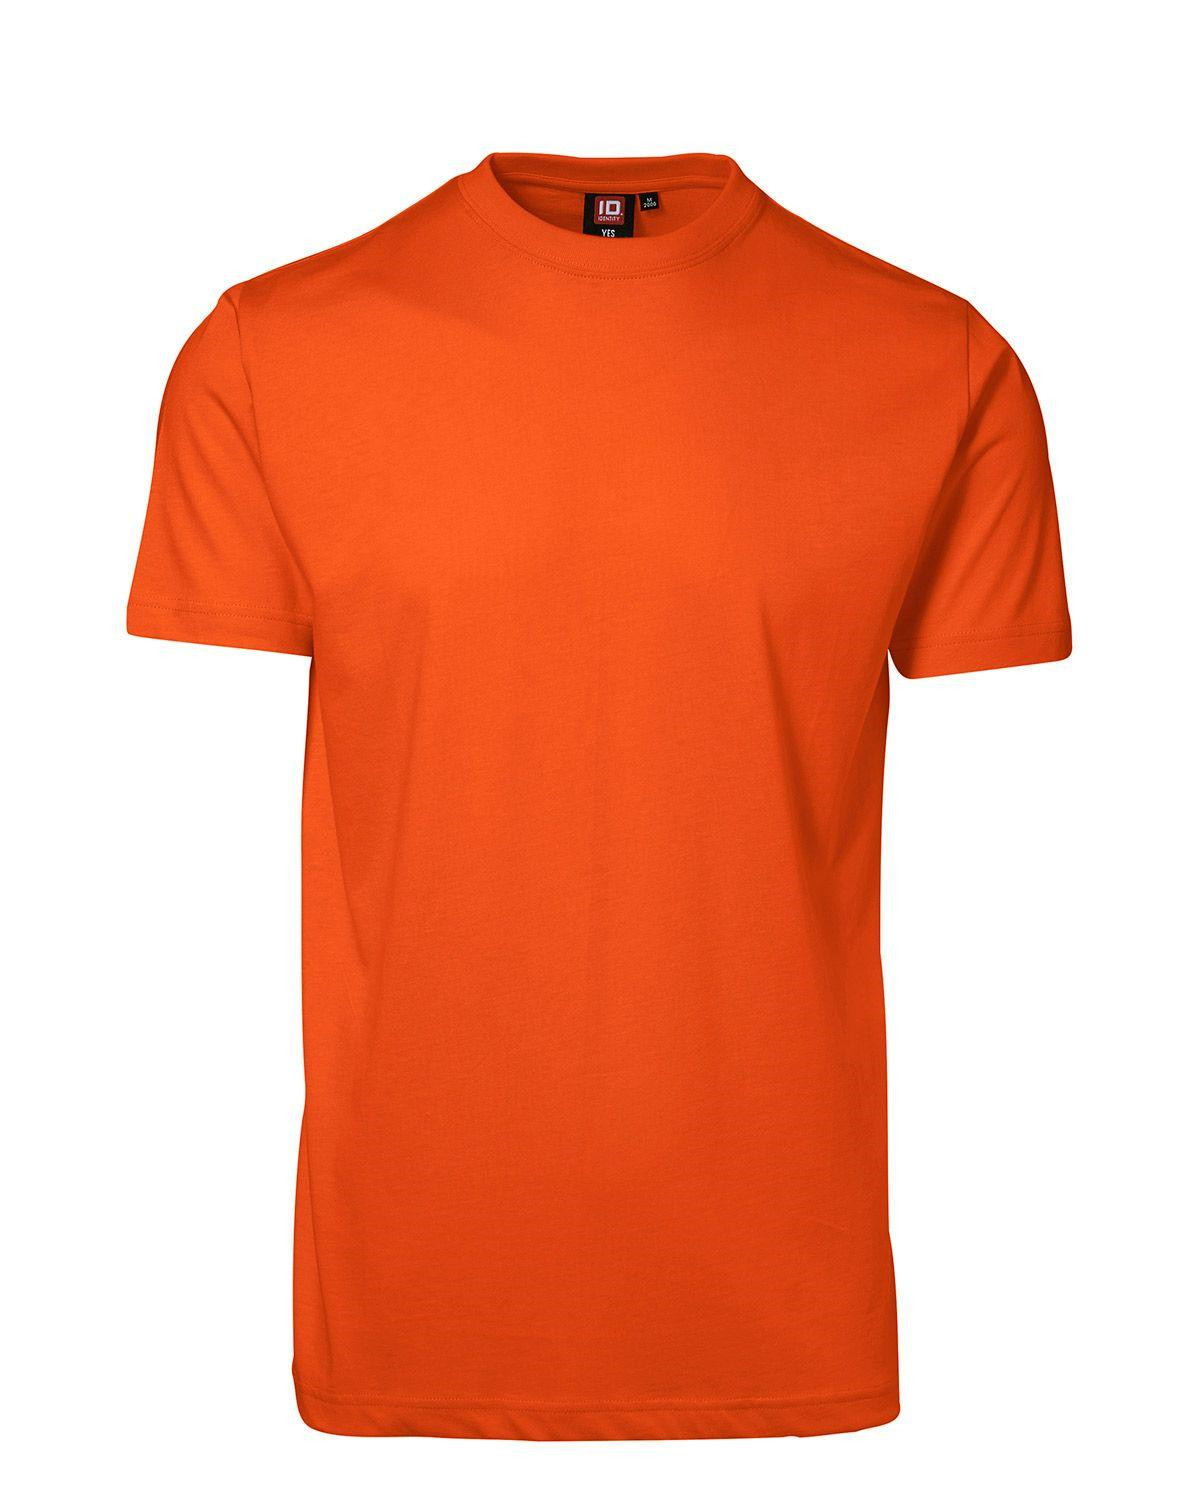 ID YES T-shirt (Orange, S)